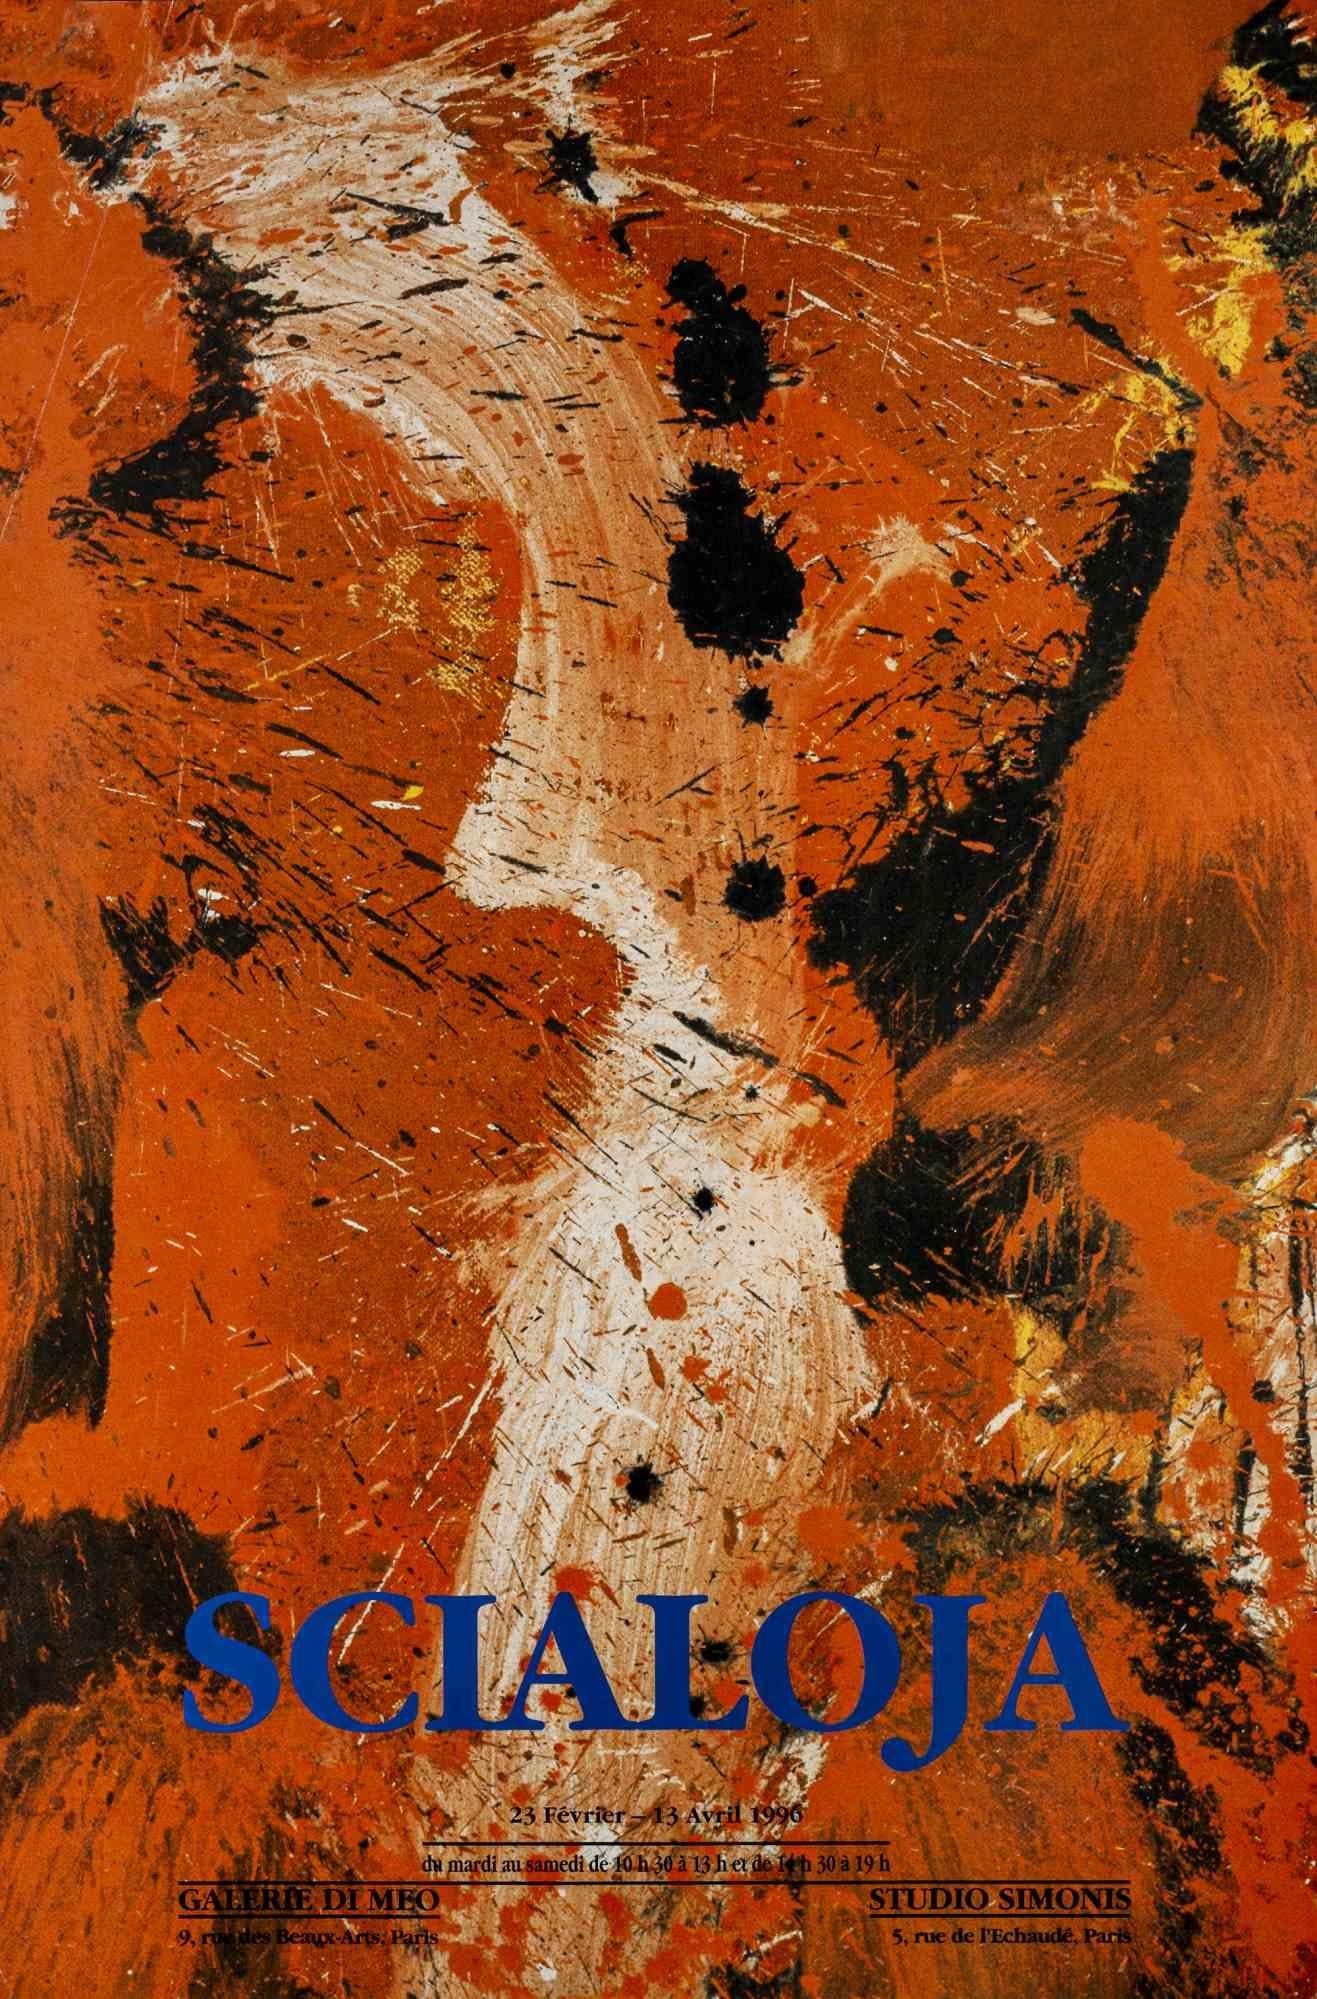 Toti Scialoja Abstract Print - Scialoja - Exhibition Poster Galerie Di Meo - 1996